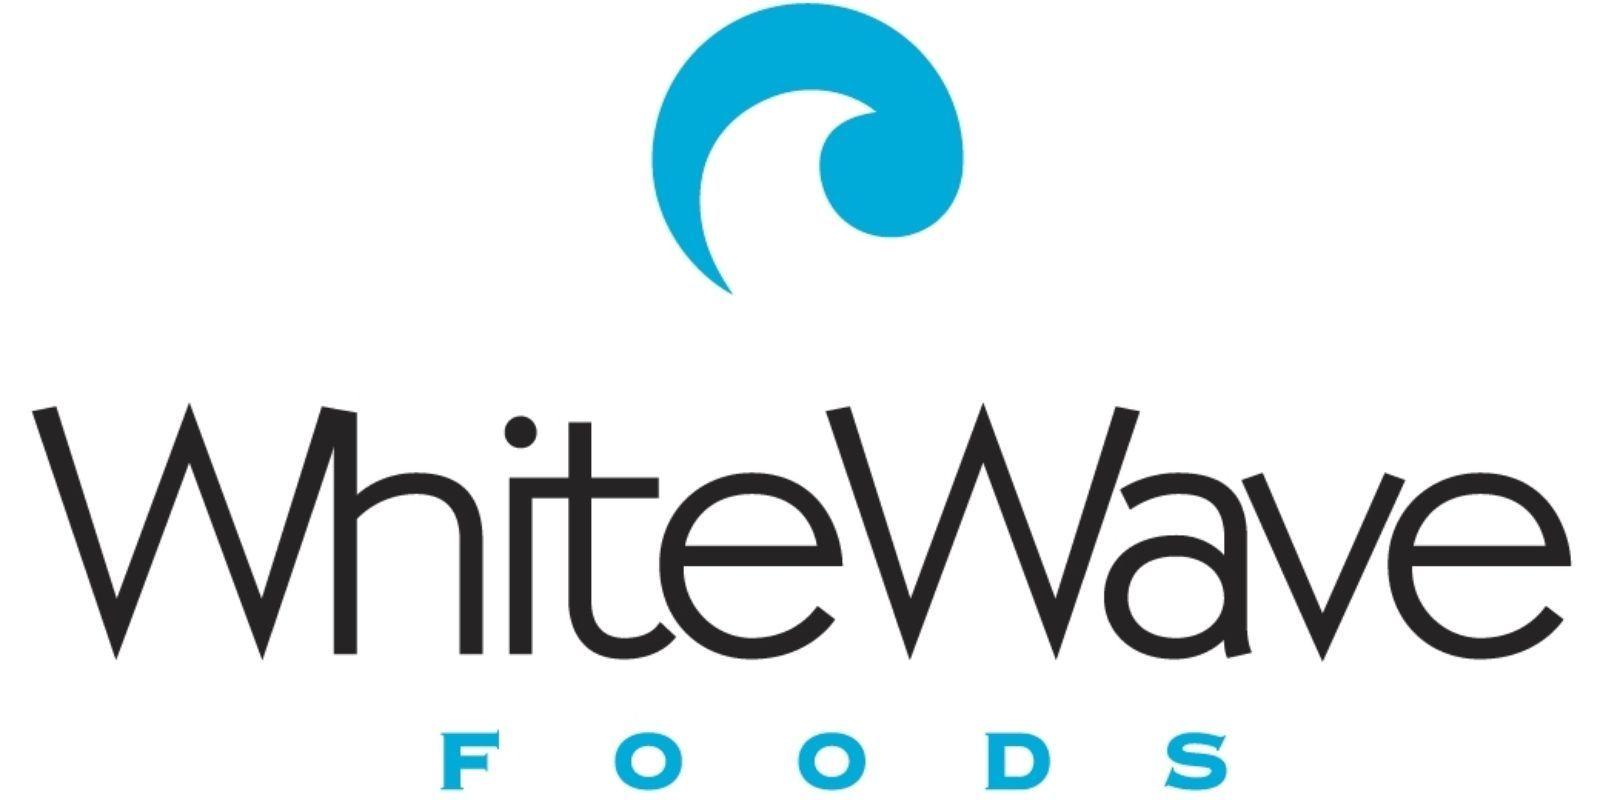 WhiteWave Logo - Whitewave Foods Mt Crawford Va Jobs | Food